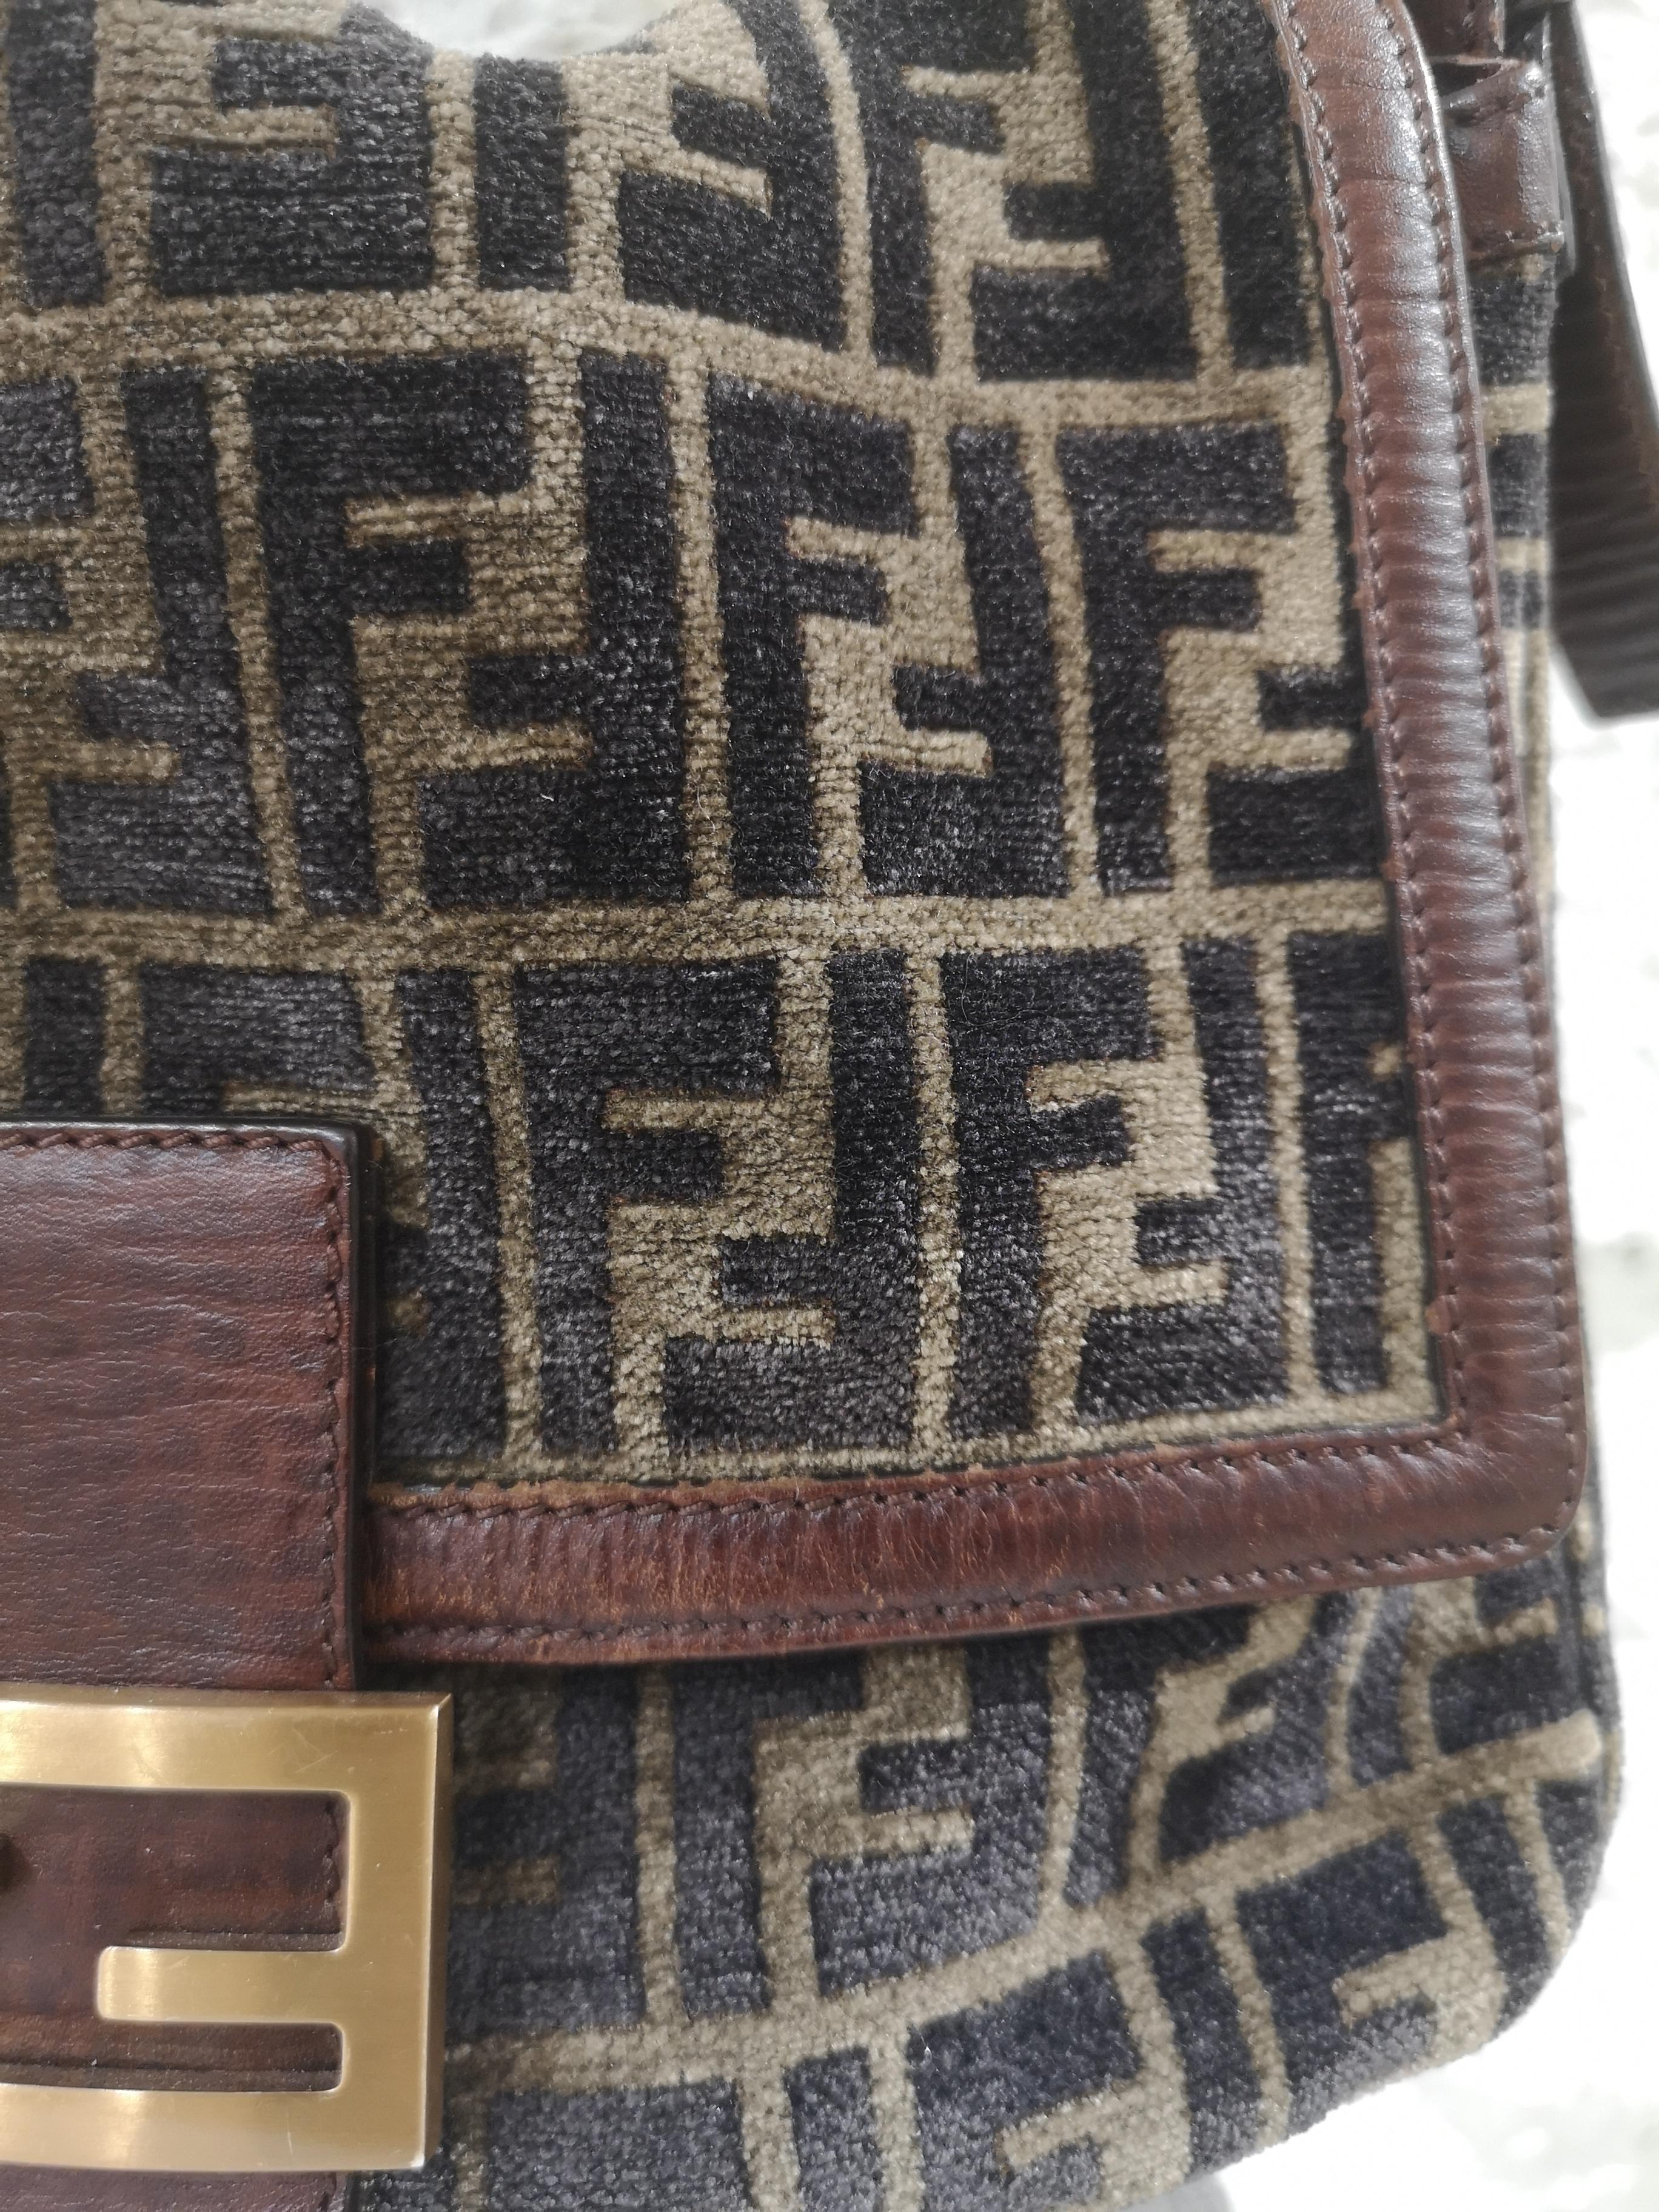 Fendi FF Suede and leather shoulder bag
MEasurements: 19 x 31 cm
11 cm depth